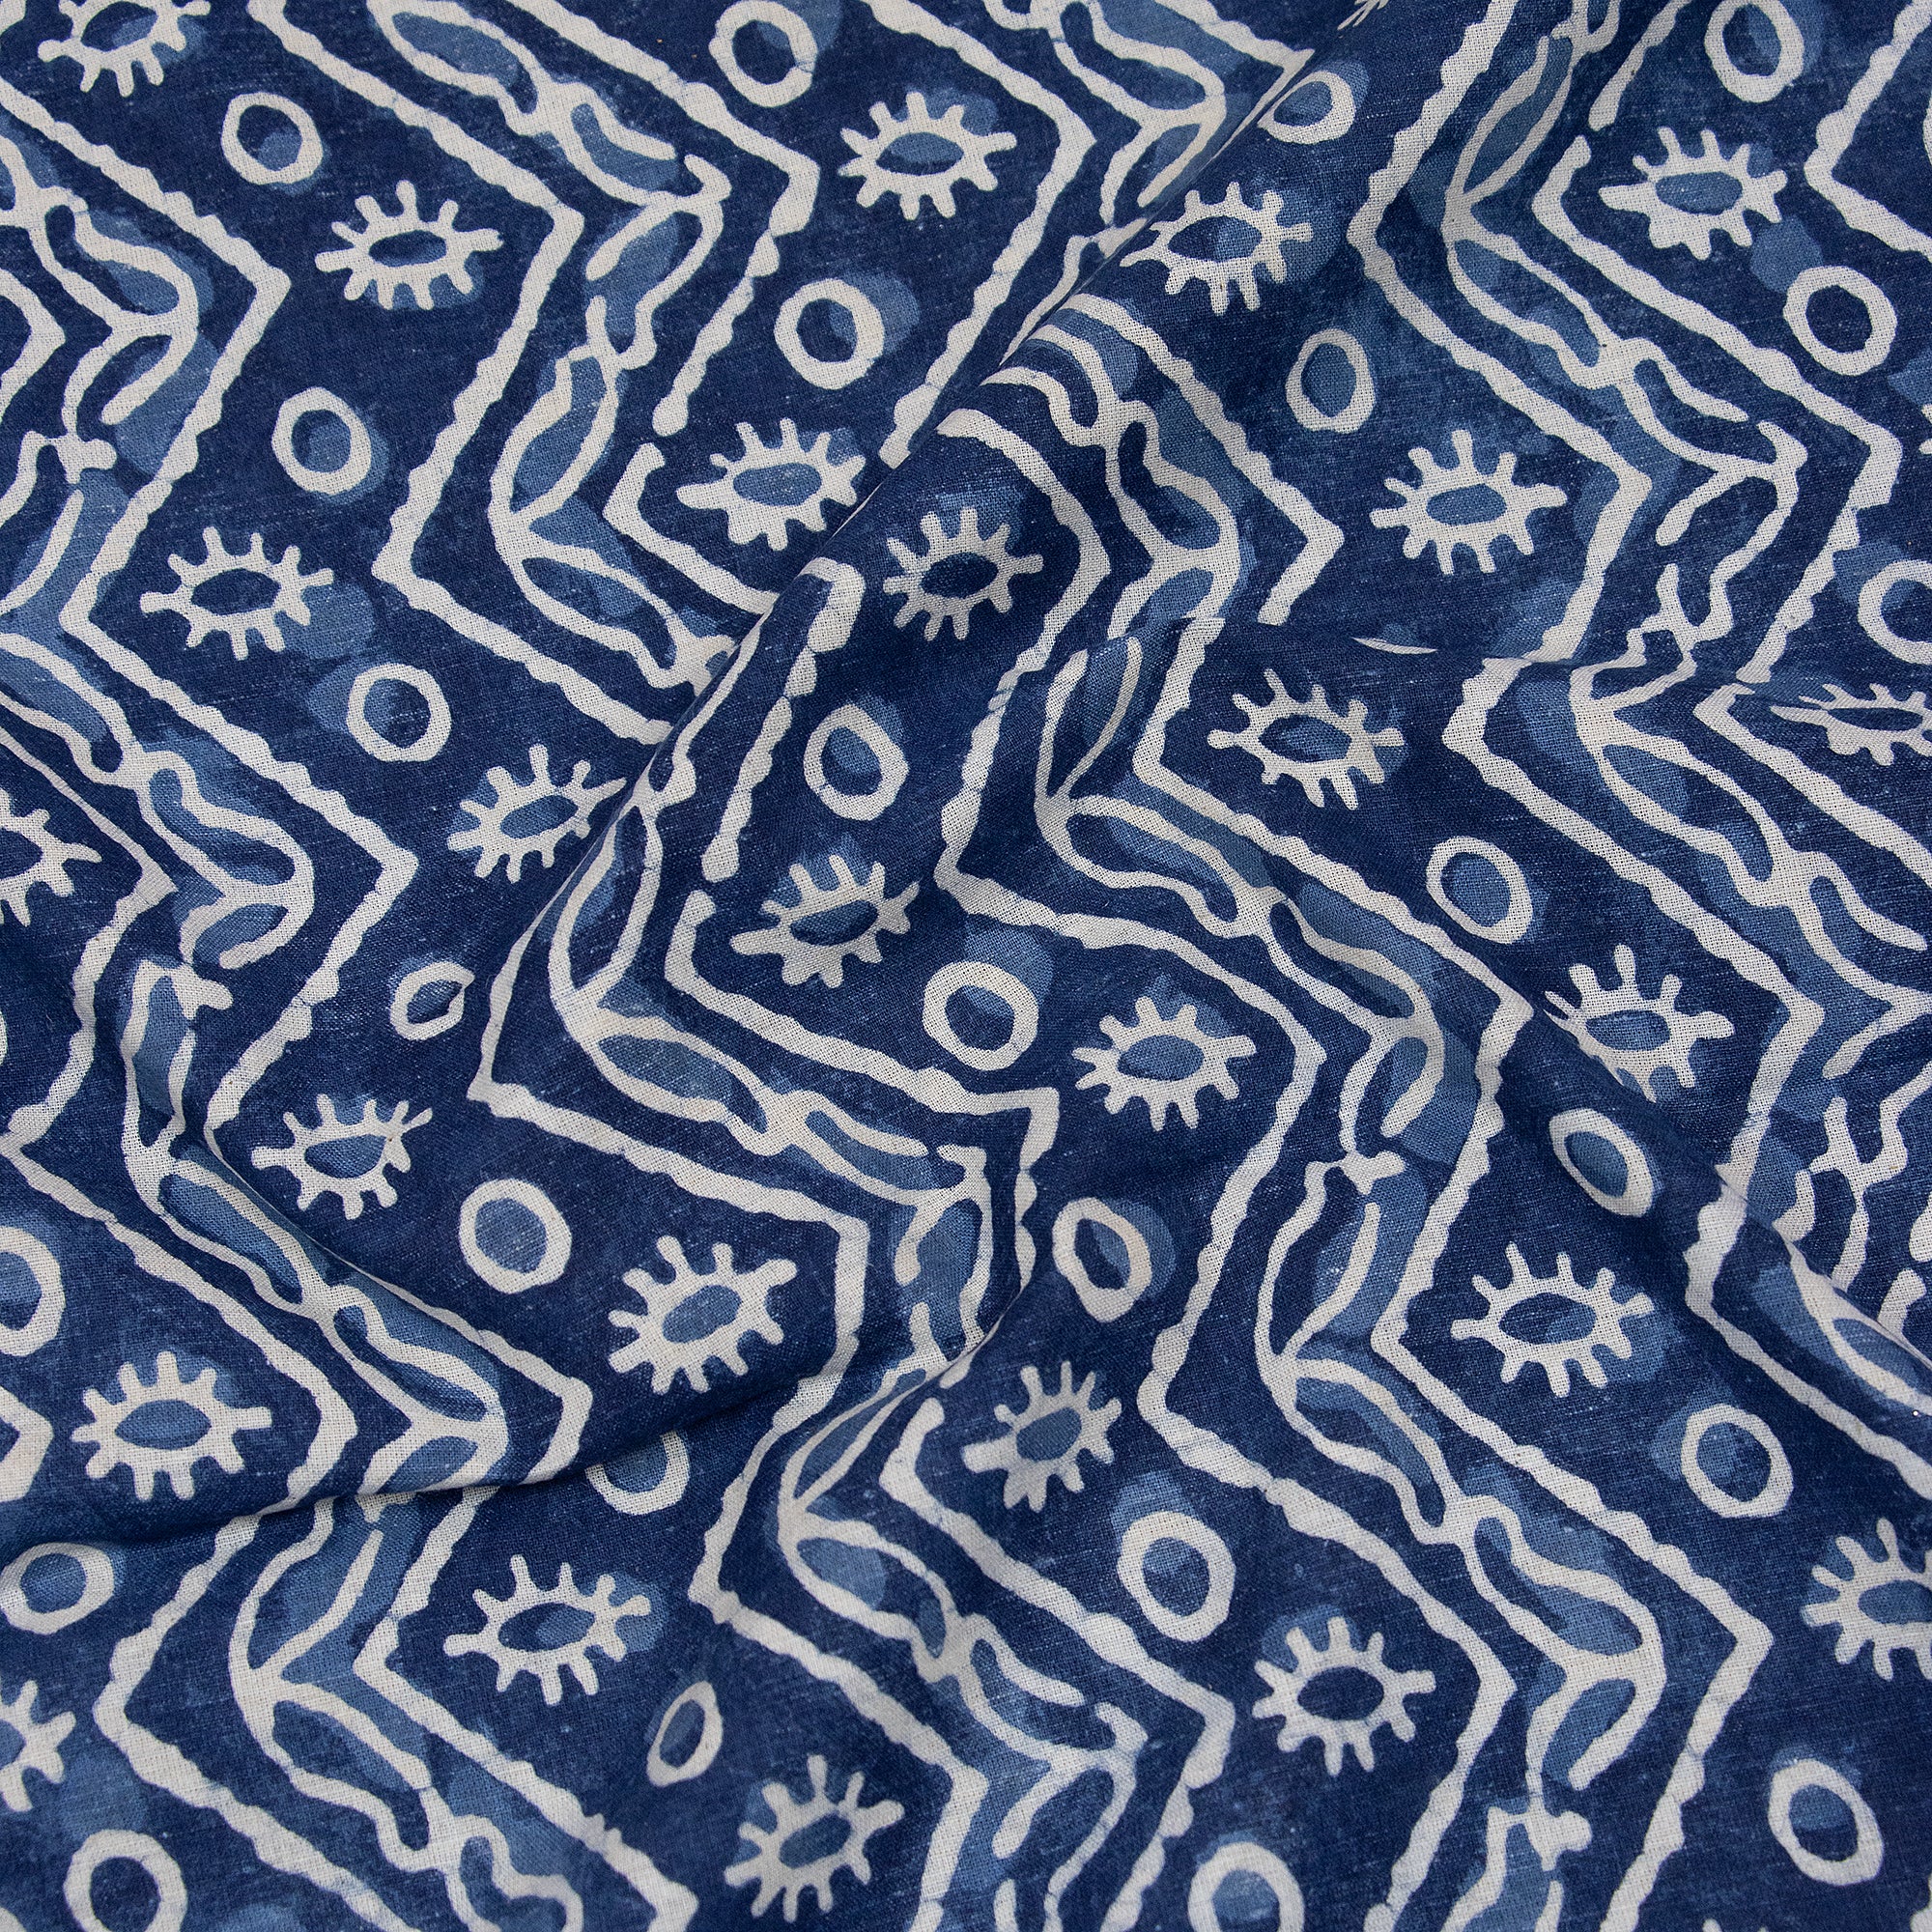 Indigo Blue Wave Printed Cotton Fabric